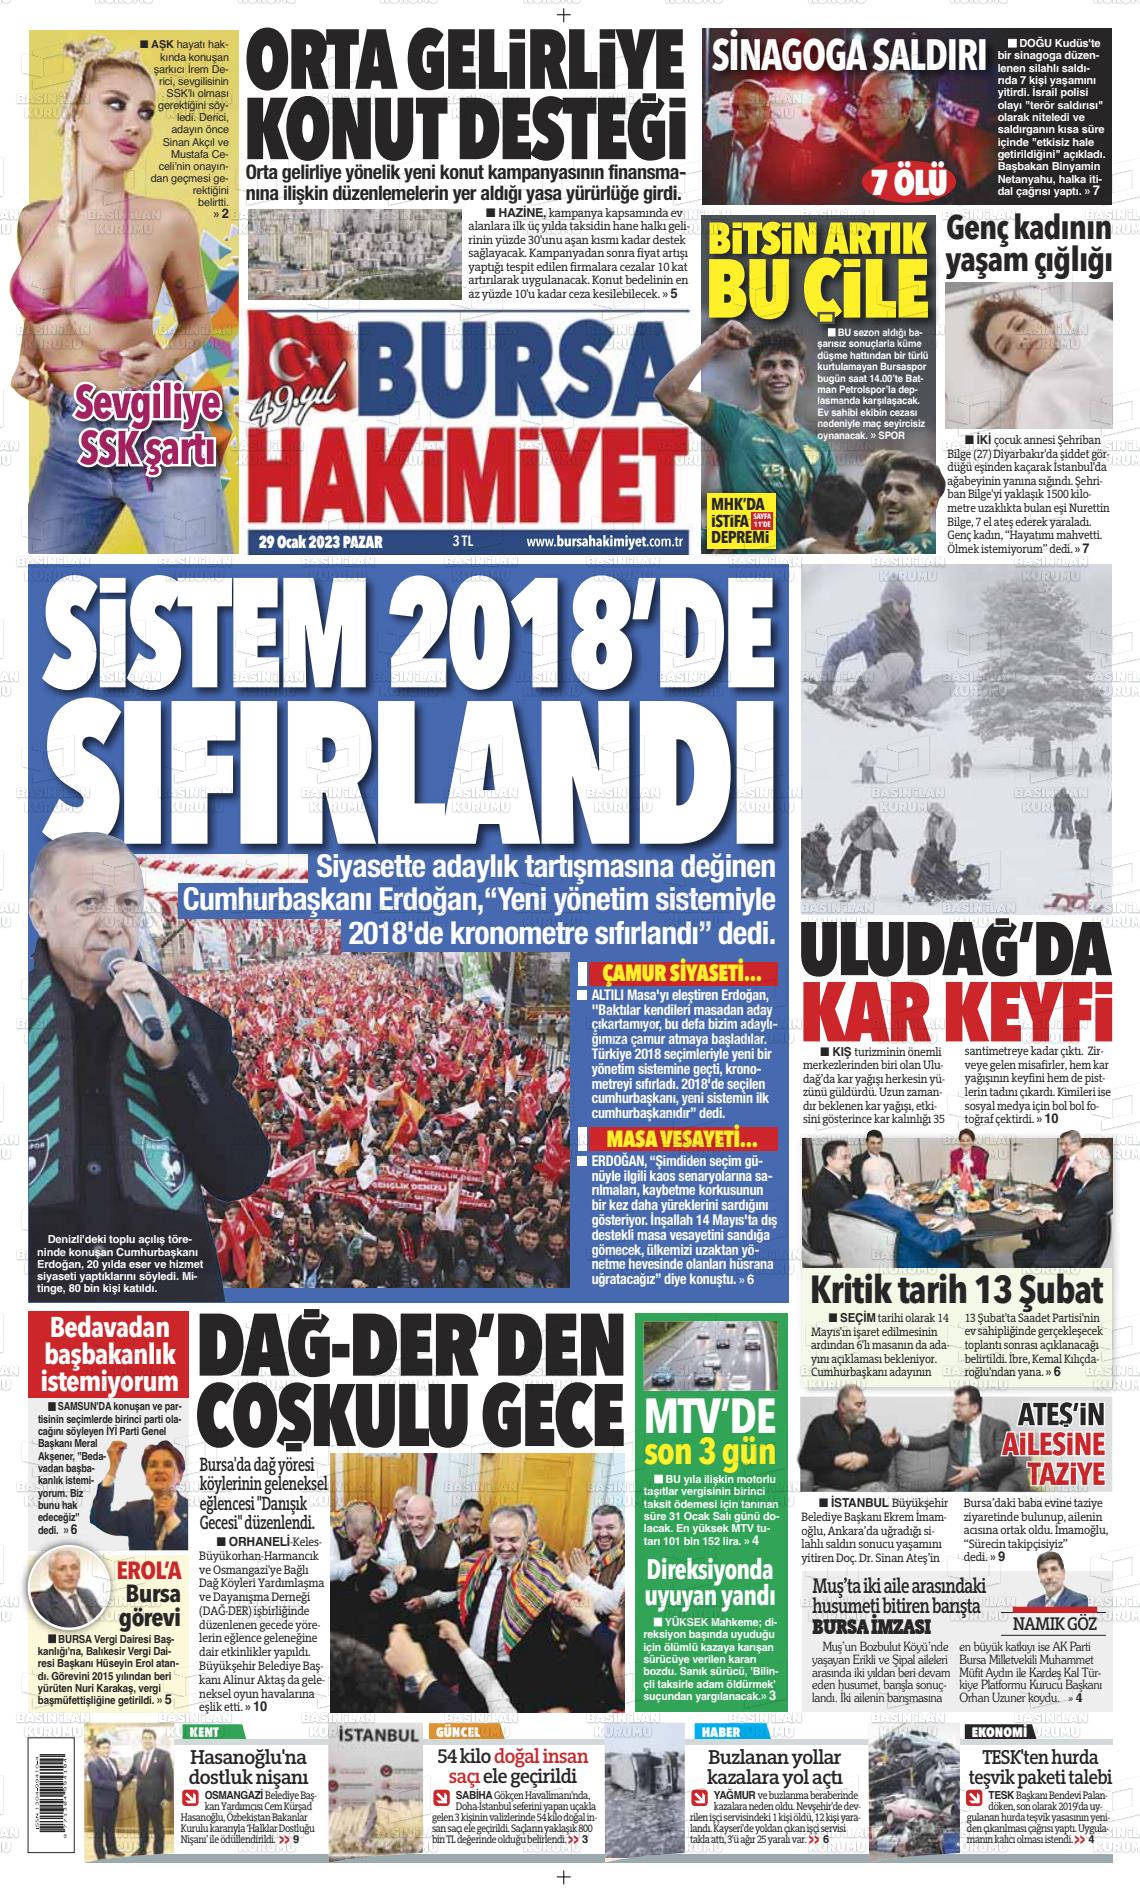 29 Ocak 2023 Bursa Hakimiyet Gazete Manşeti